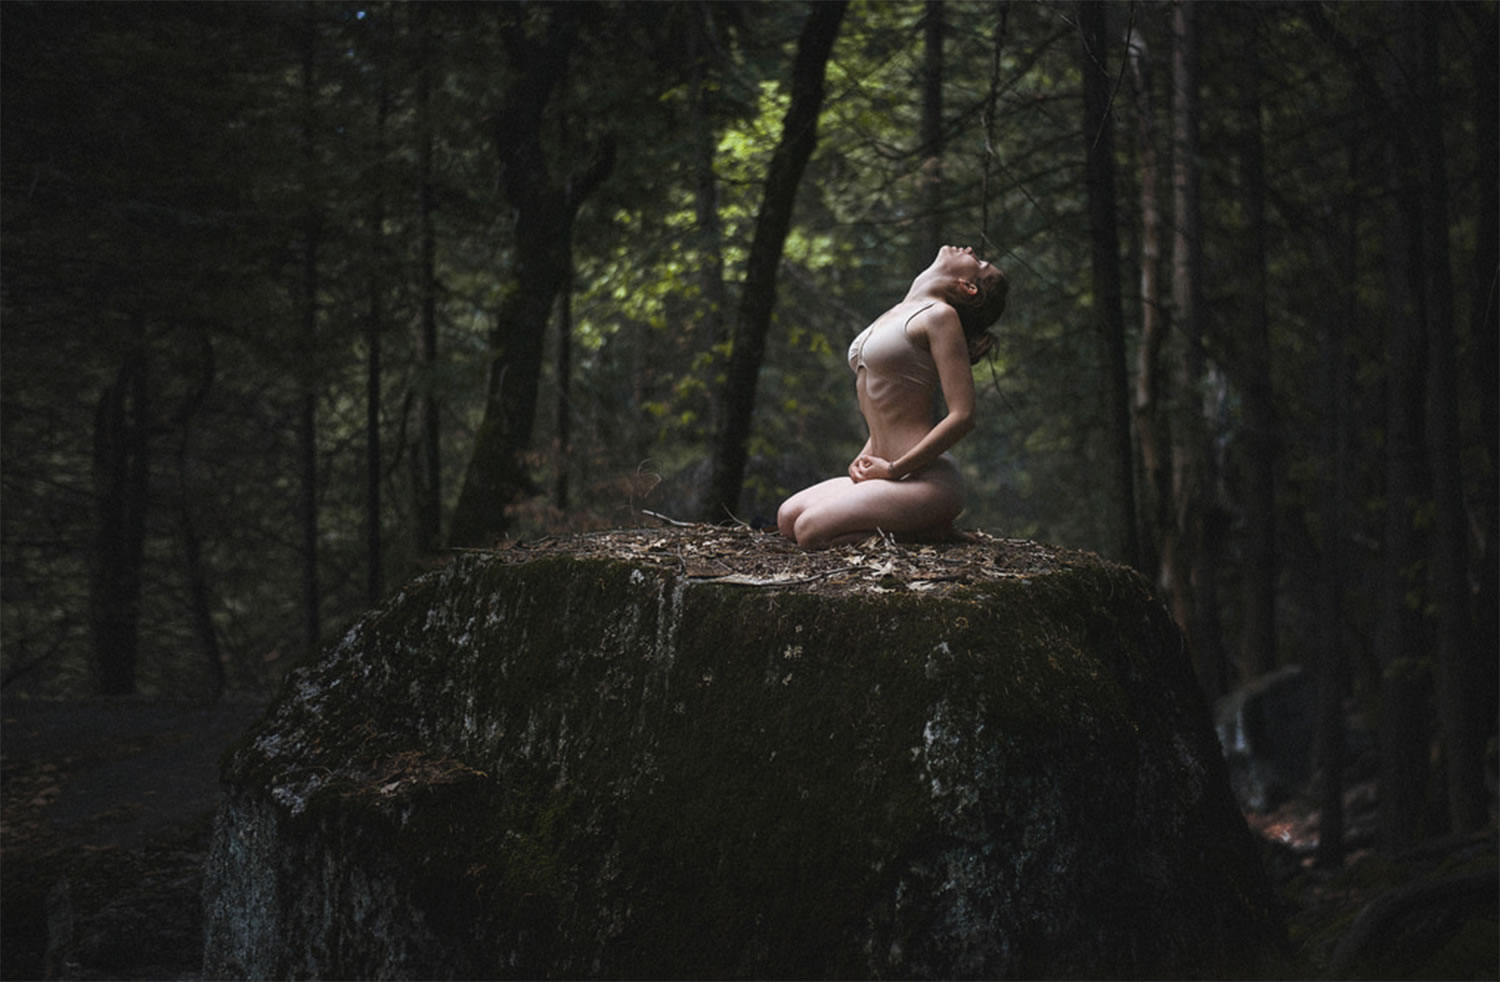 self-portrait artist sitting on forest ground, in nature